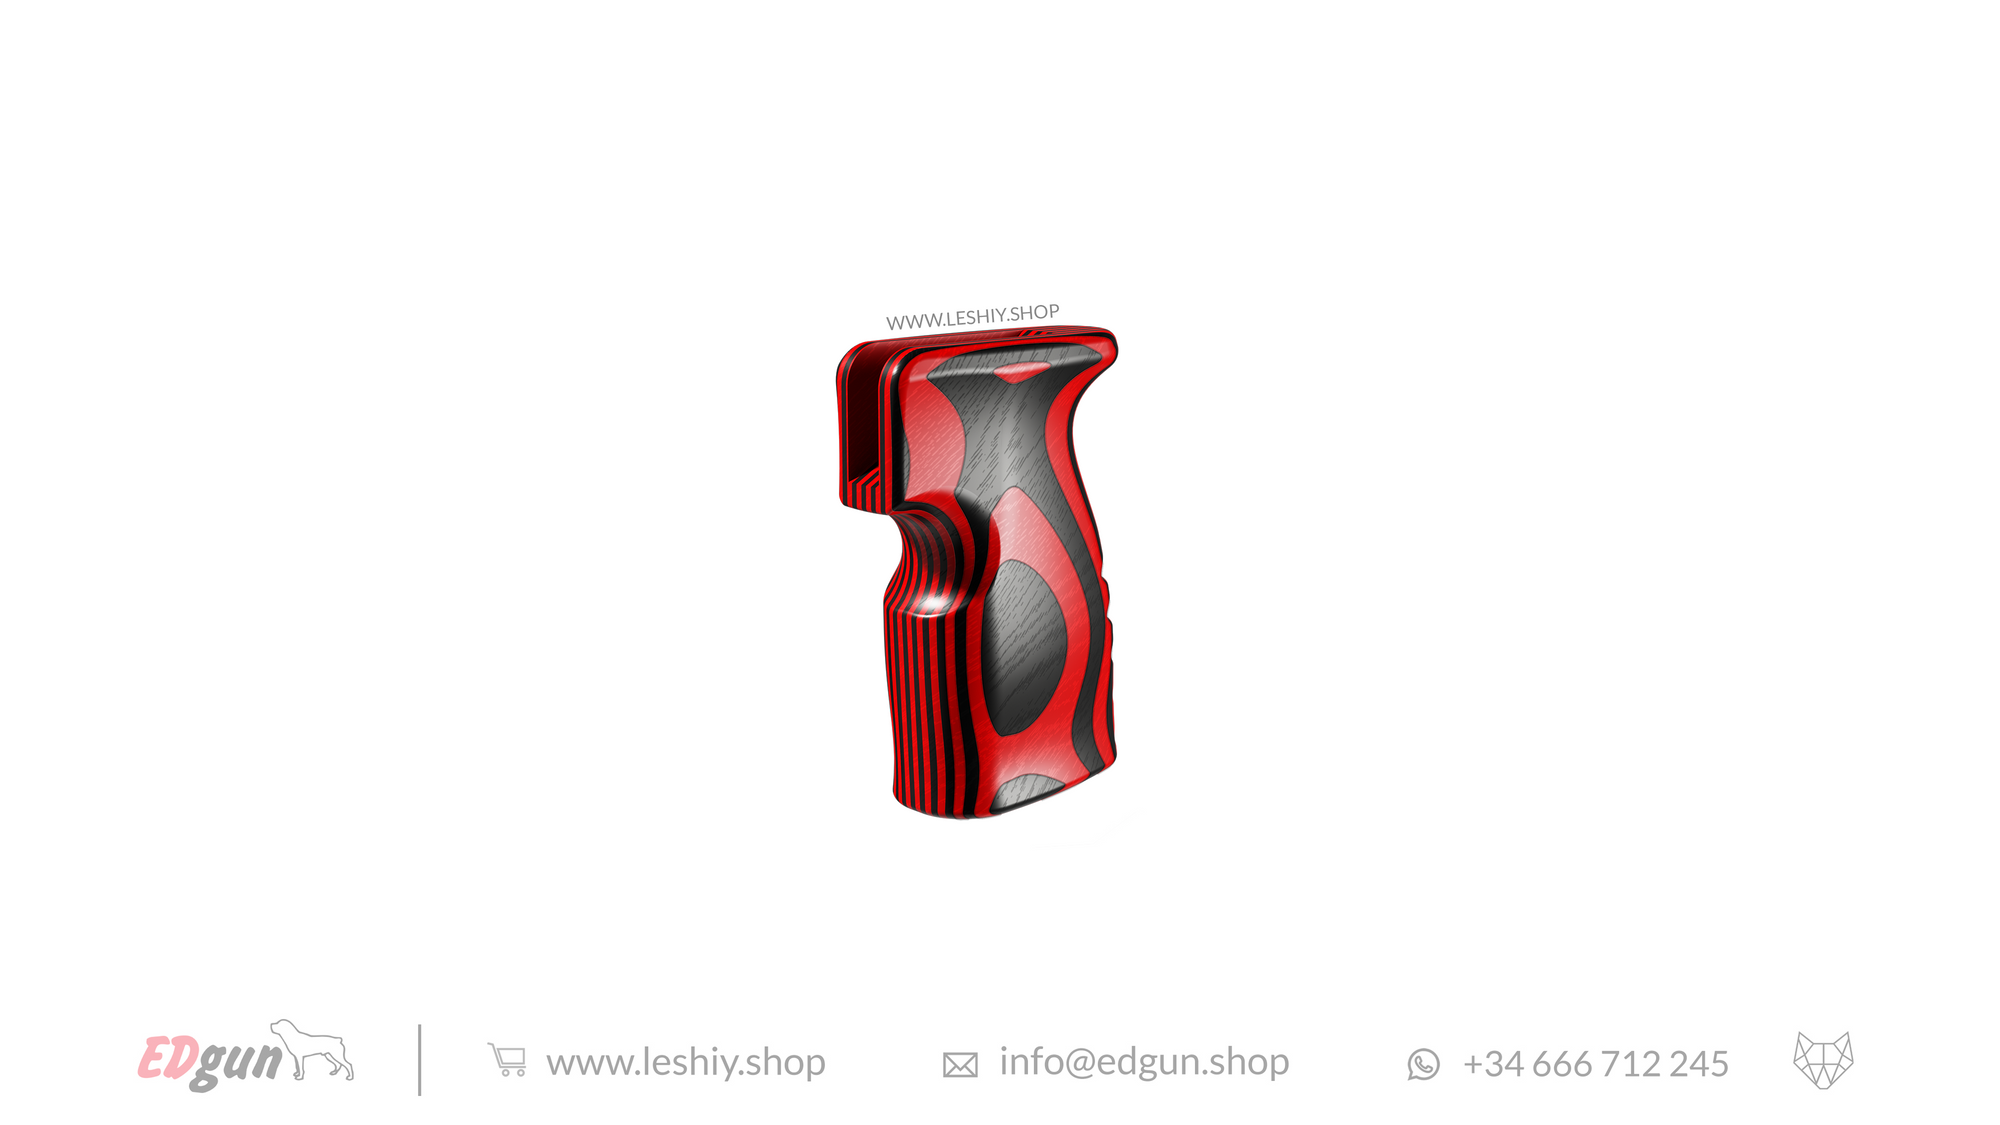 Leshiy 2 Grip EDgun Russian Design in red